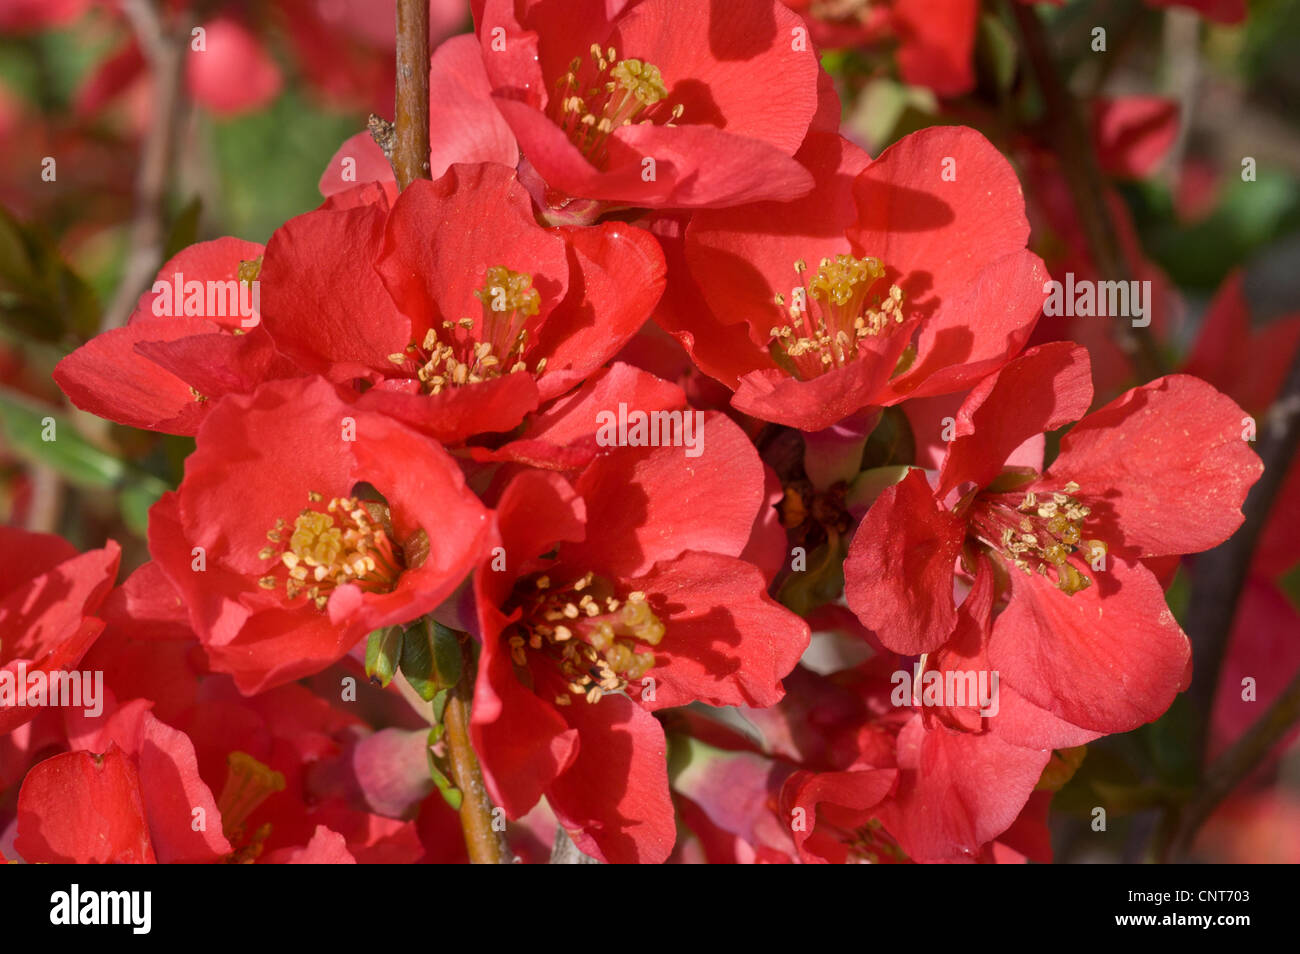 Red flowers of Chaenomeles x Superba shrub, Rosaceae, bloom, blossom, petals, cultivar, horticulture, gardening, plant, garden Stock Photo